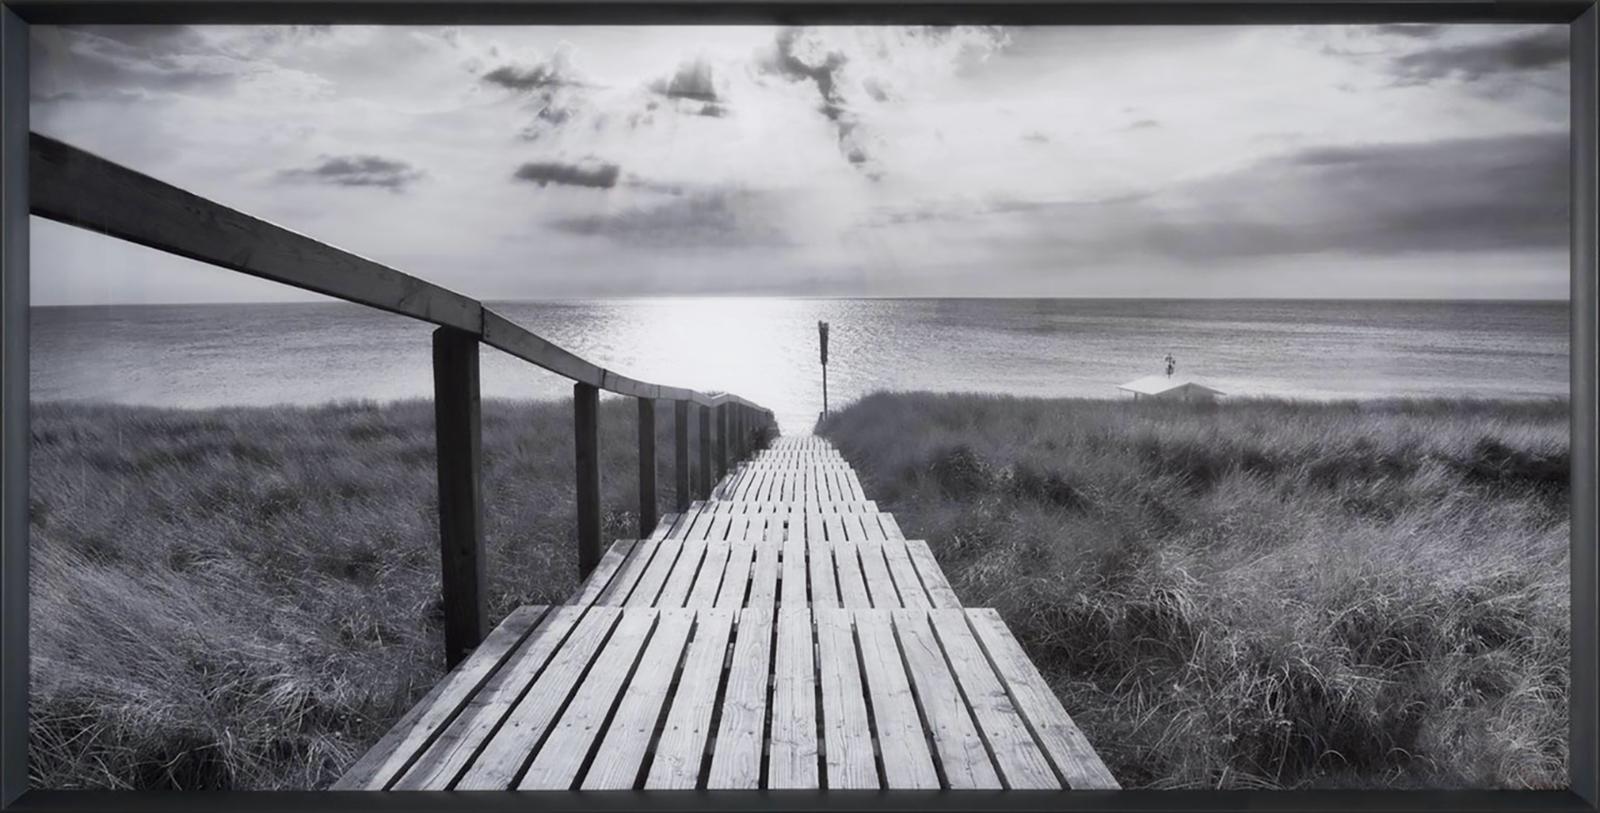 Rantumer Steg - contemporary black/white photography ocean landscape, footbridge - Photograph by Michael Götze